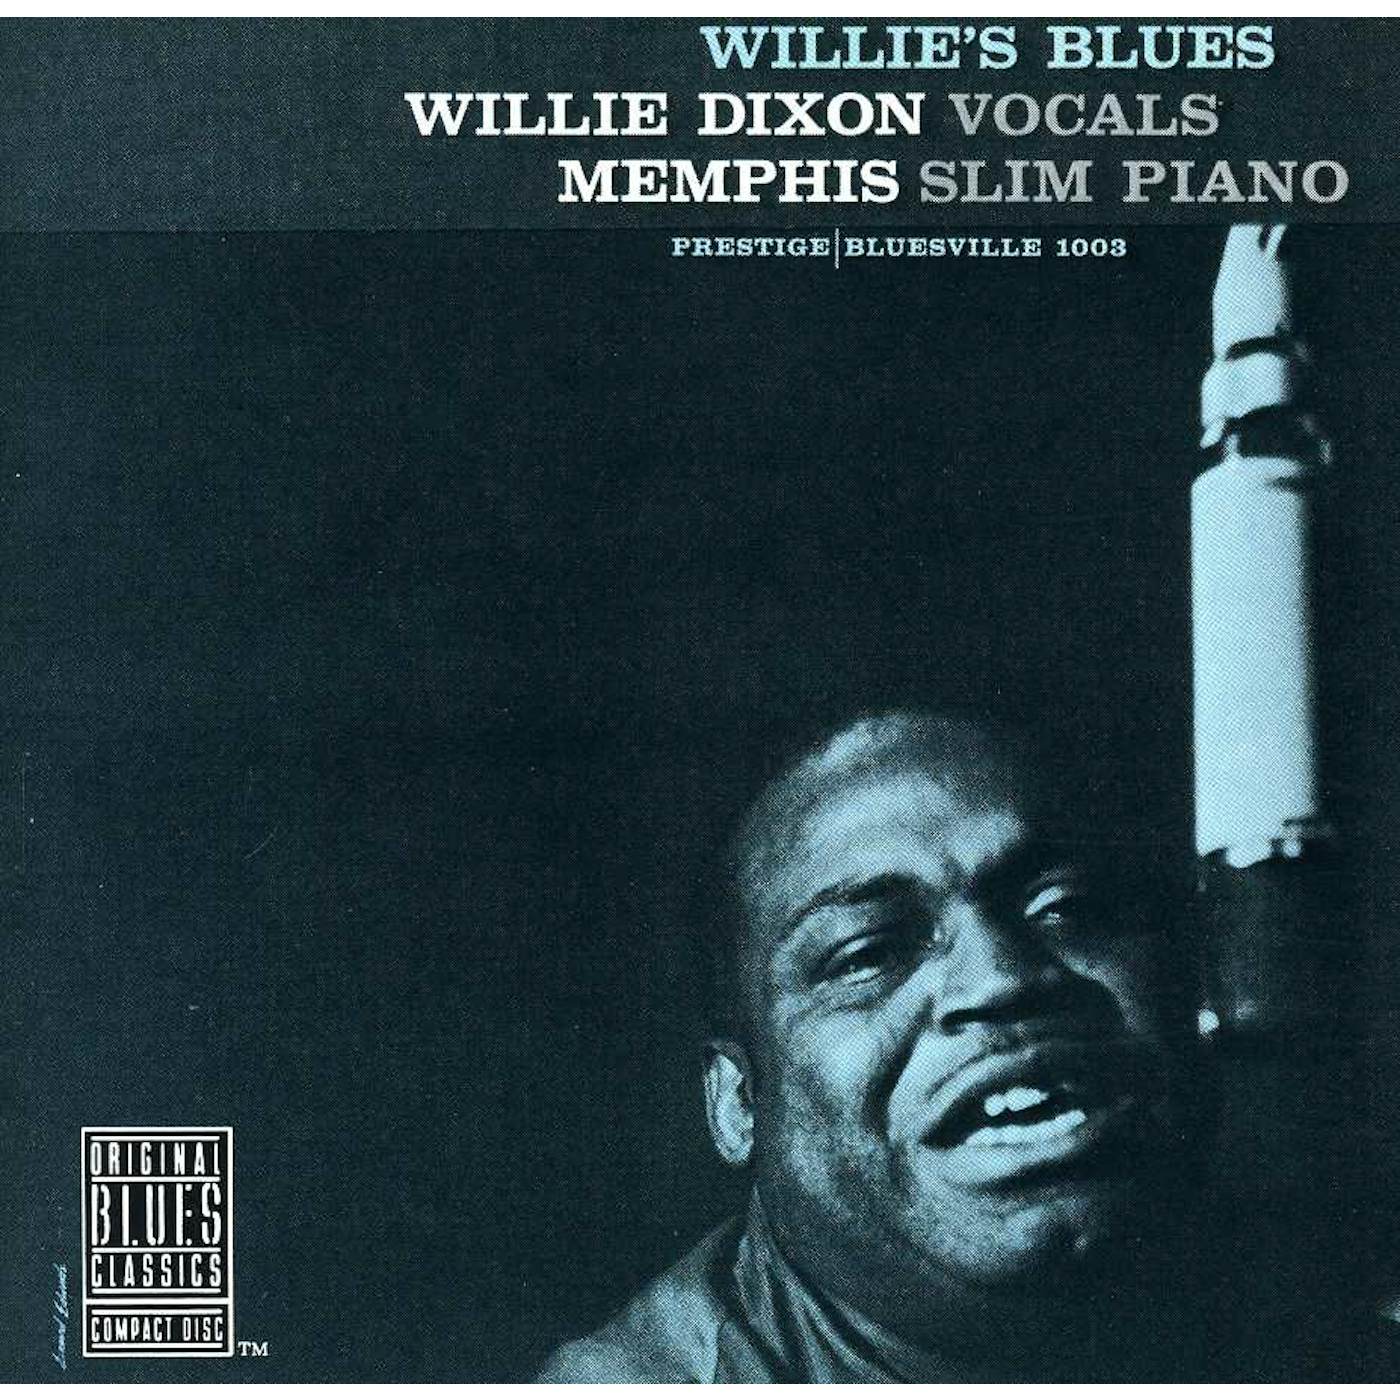 Willie Dixon WILLIE'S BLUES CD